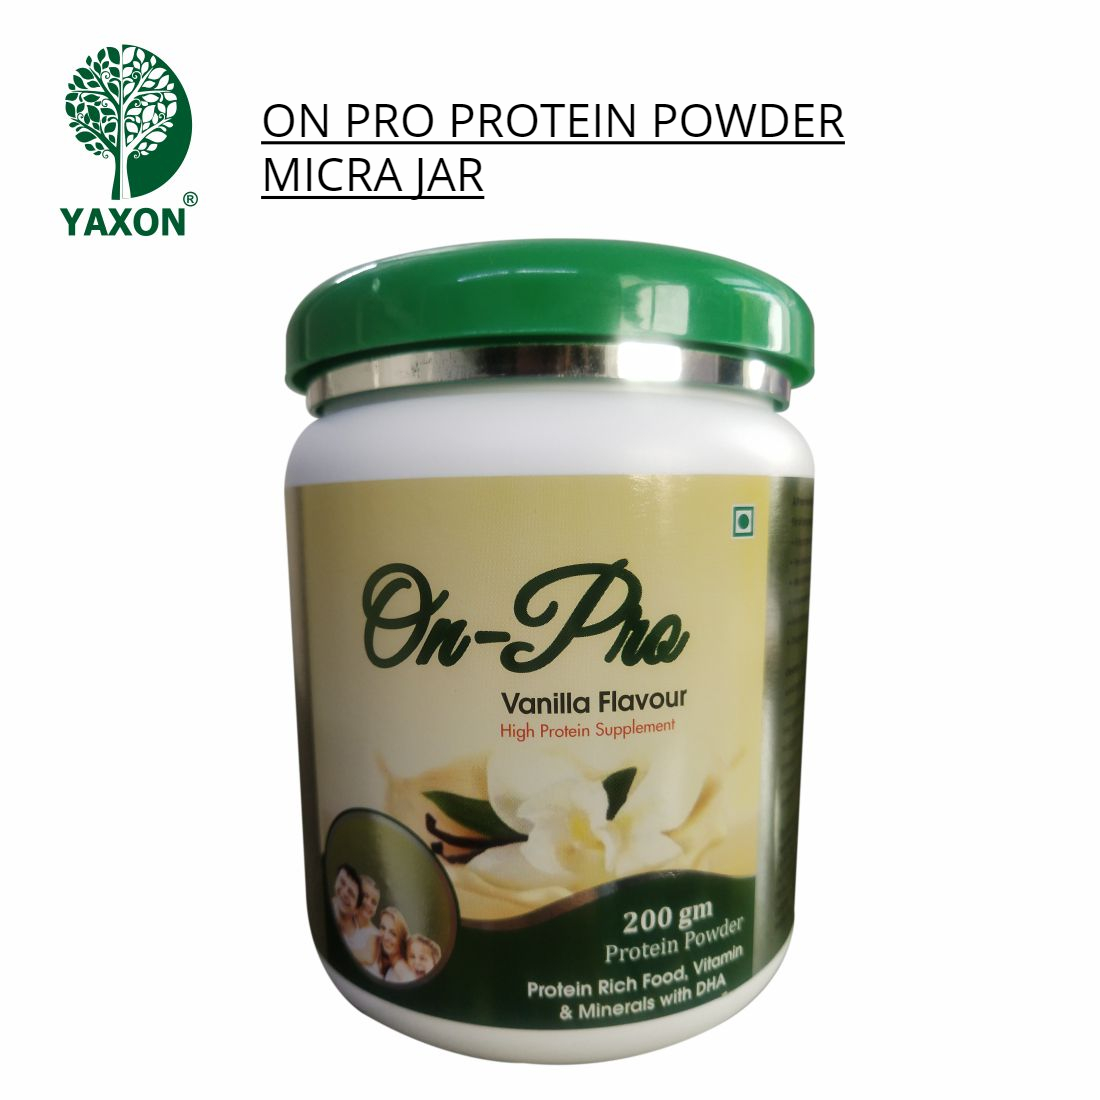 YAXON ON PRO Vanilla Protein Powder Micra Jar